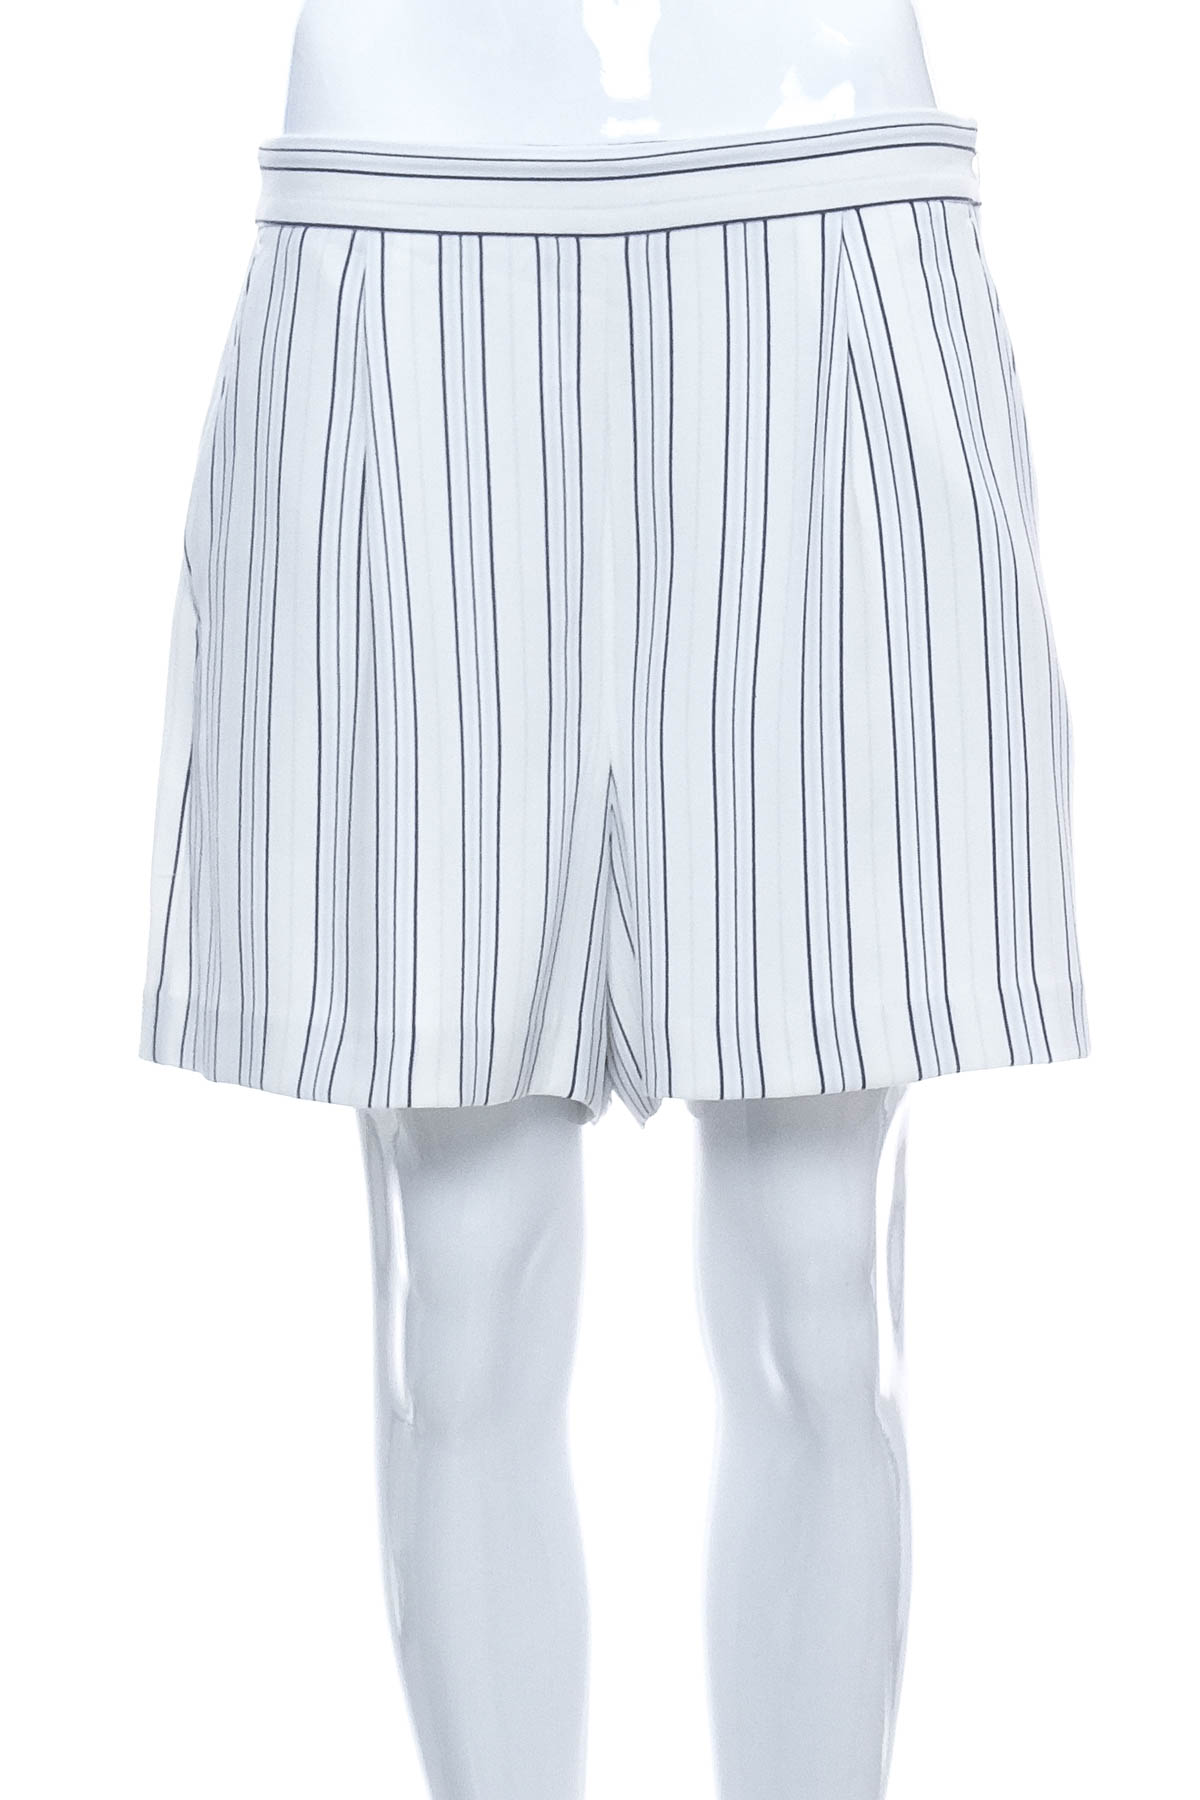 Female shorts - Ann Taylor - 0